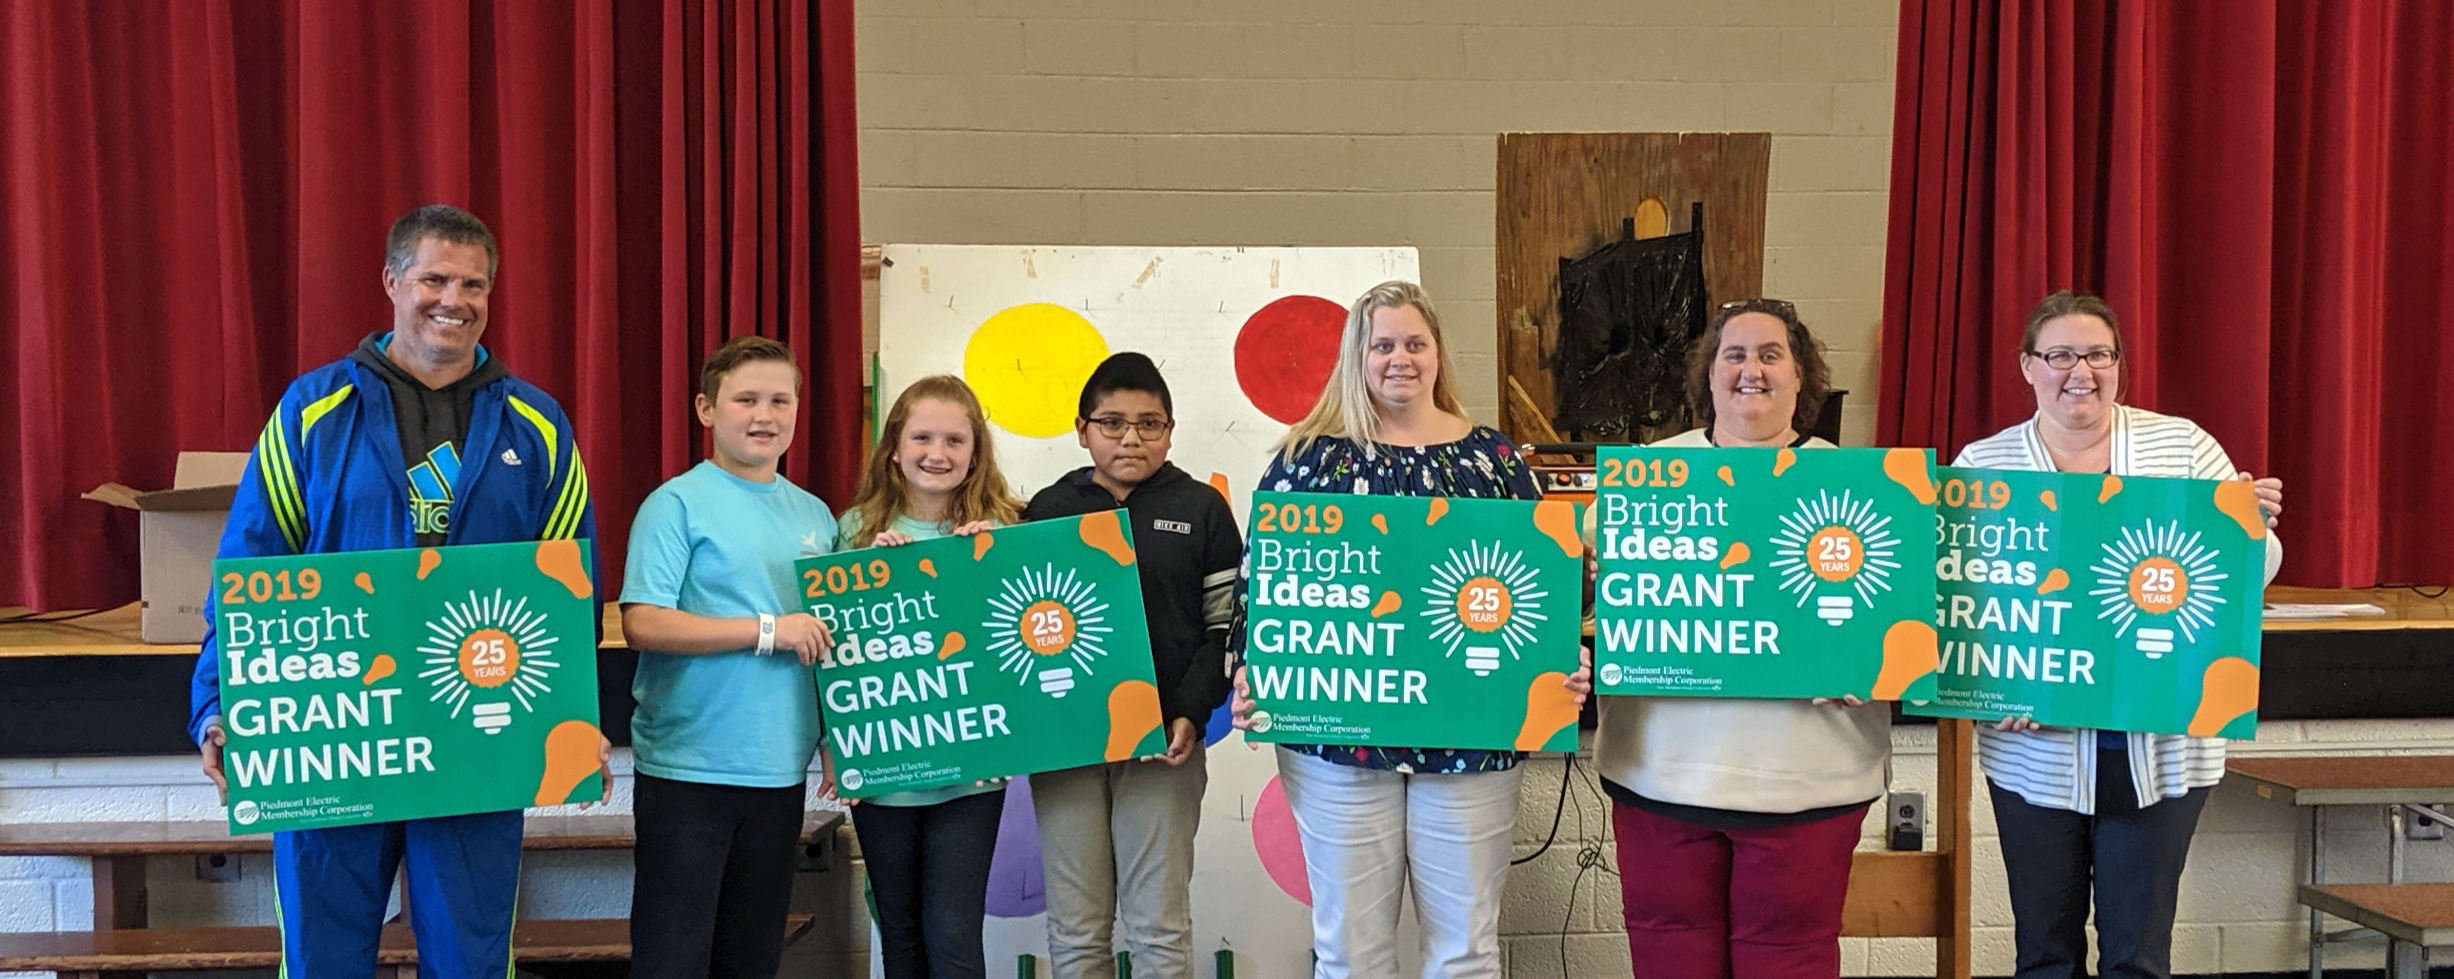 Bright Ideas Winners at Woodland Elementary